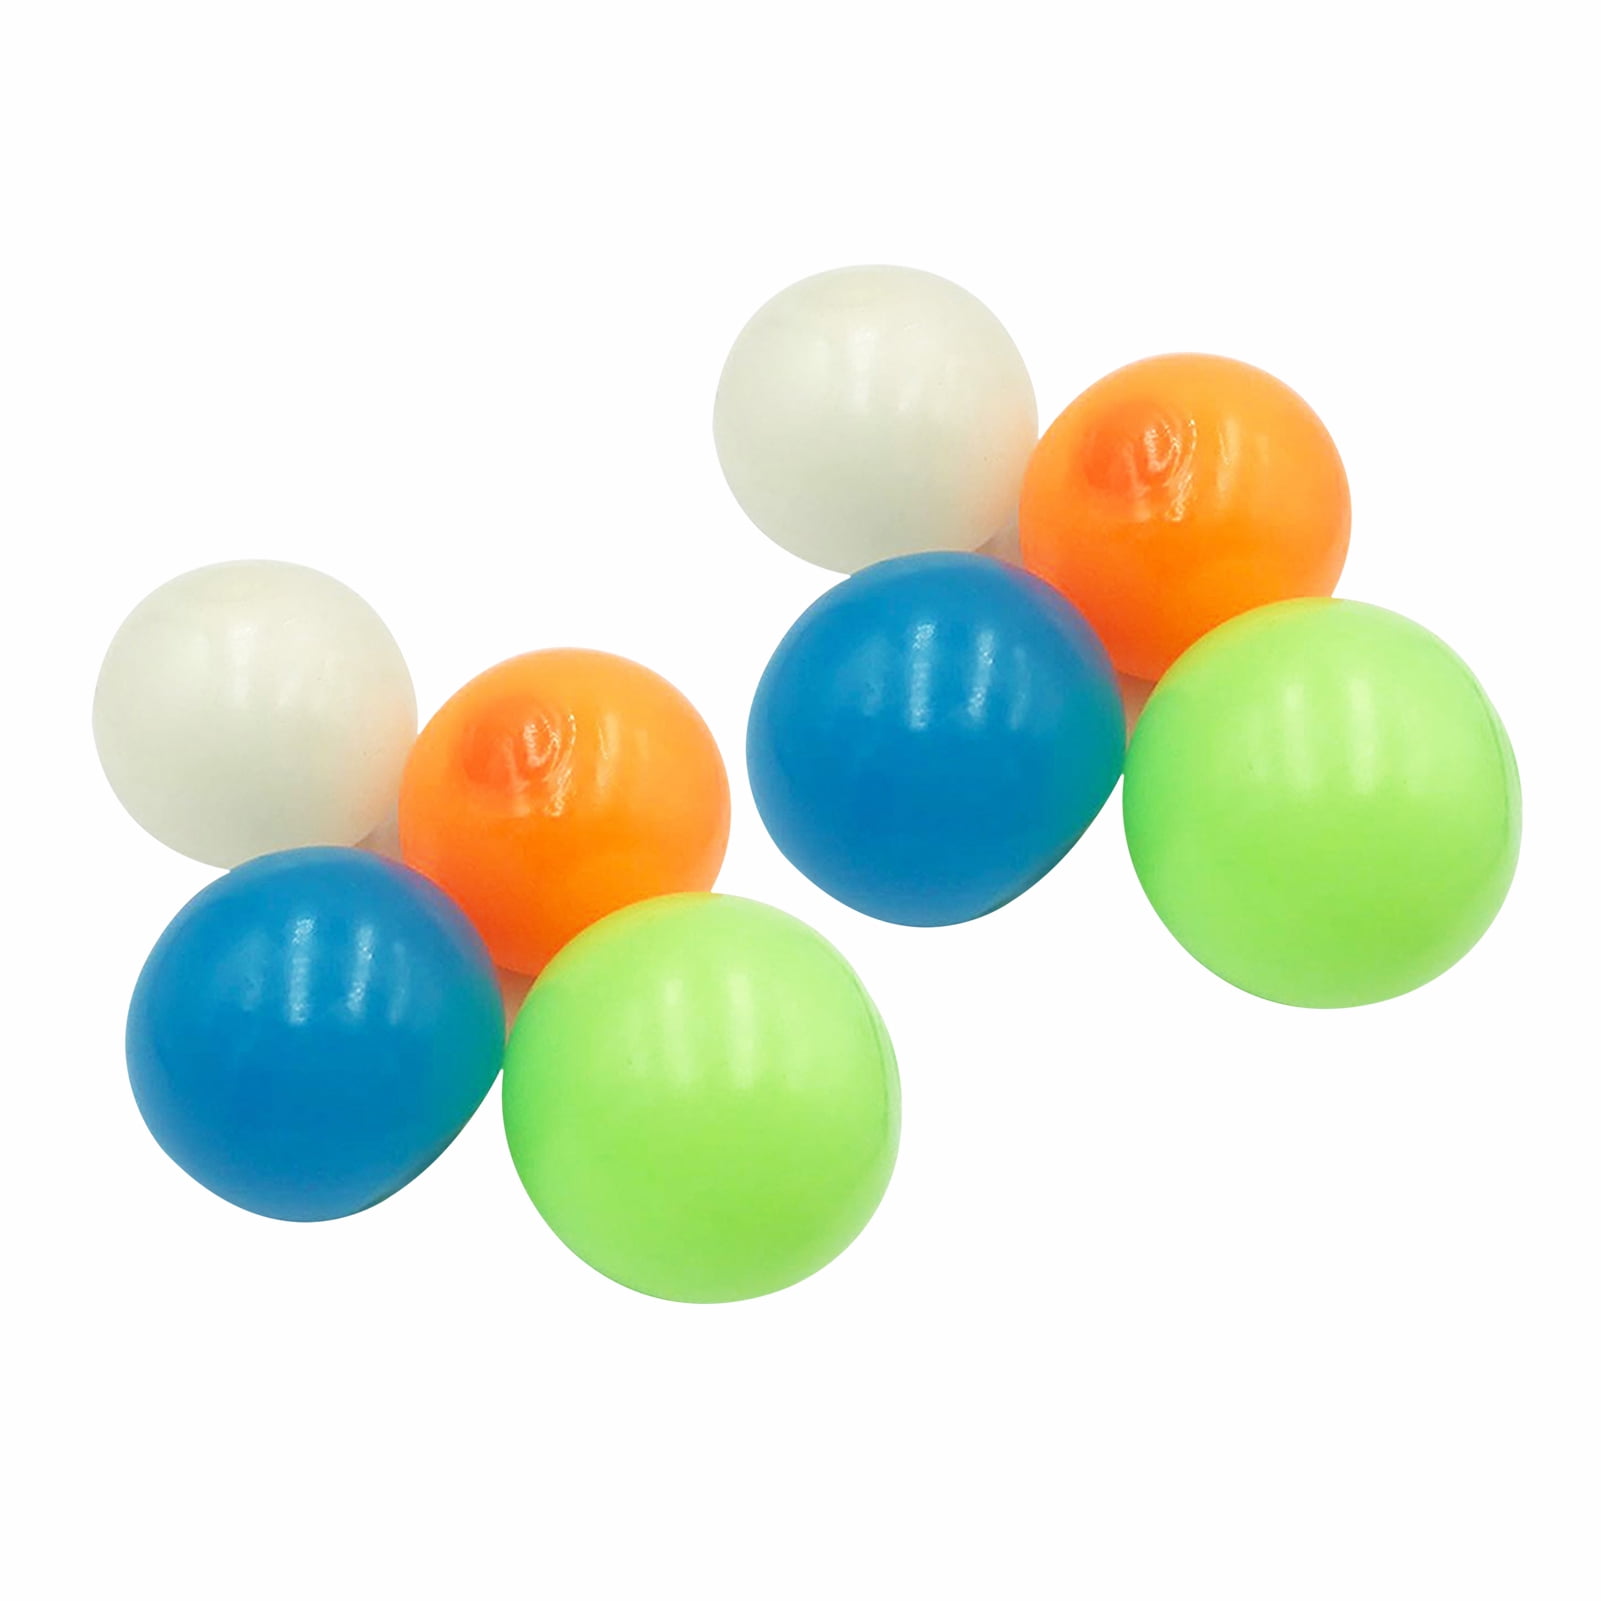 8 Sticky Balls Klebrige Wand Target Ceiling Stressabbau Ball Stress Relief Toy 